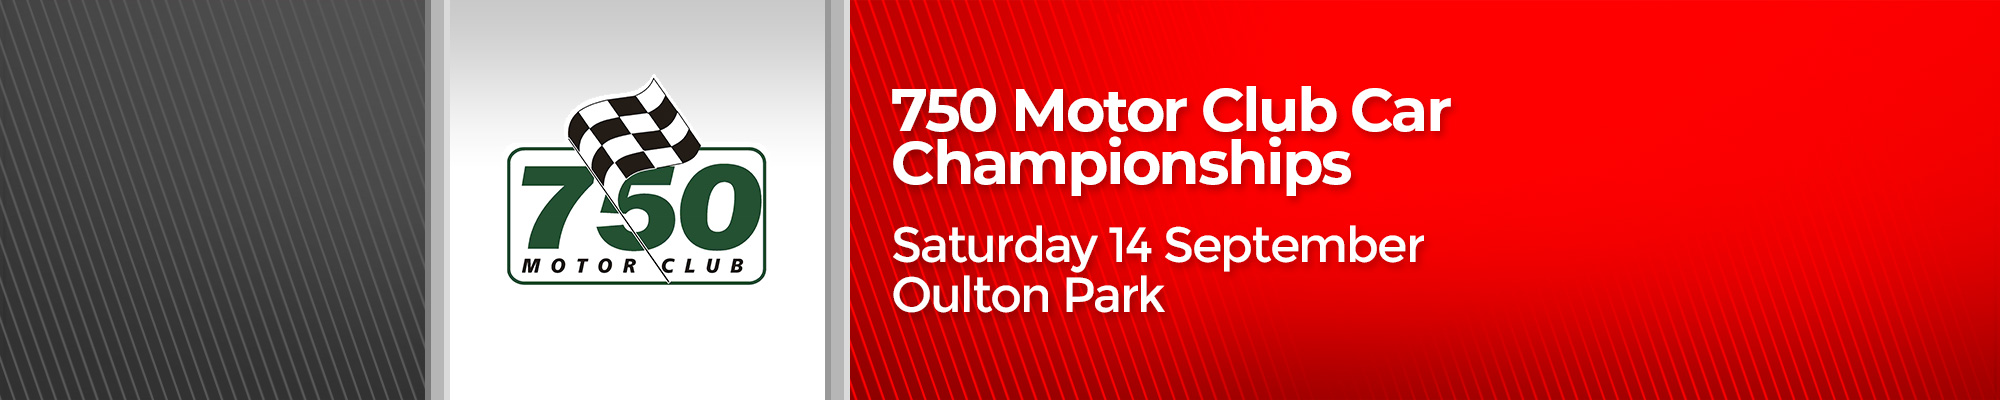 750 Motor Club Car Championships